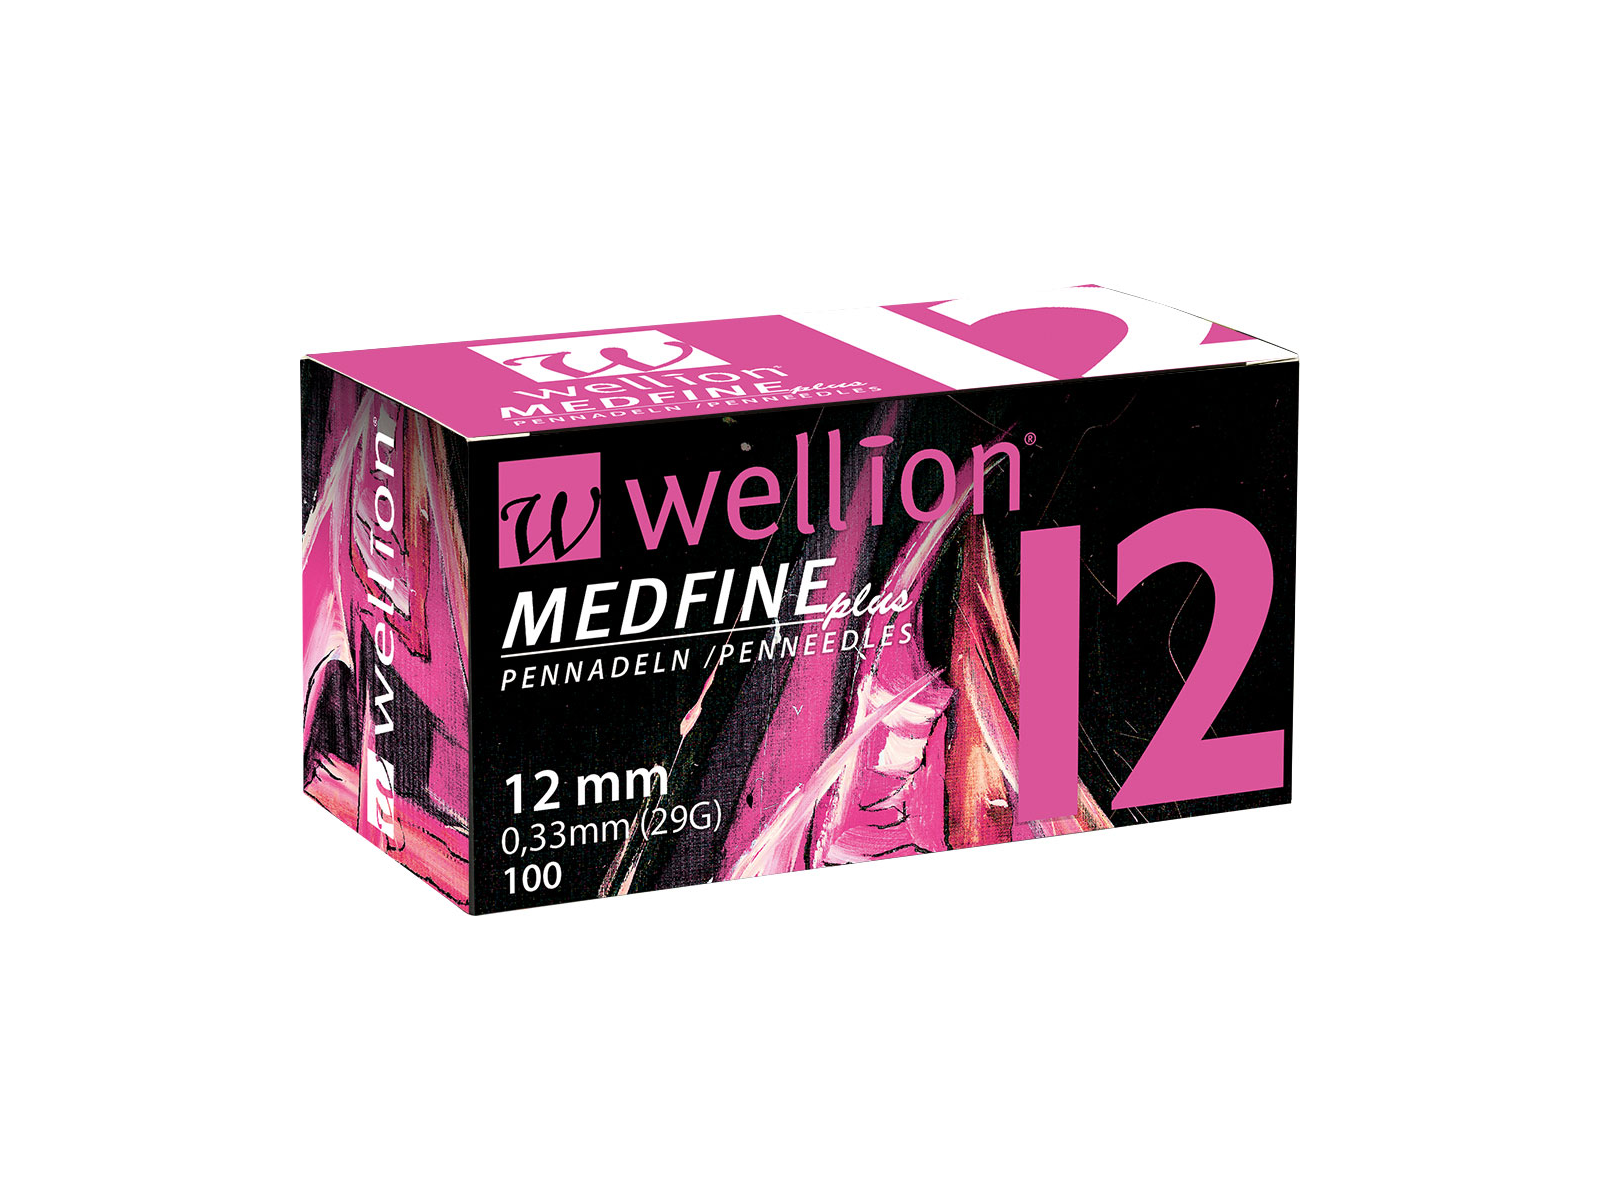 WELL112 Wellion MEDFINE plus Pennadeln, 12 mm, 100 Stück